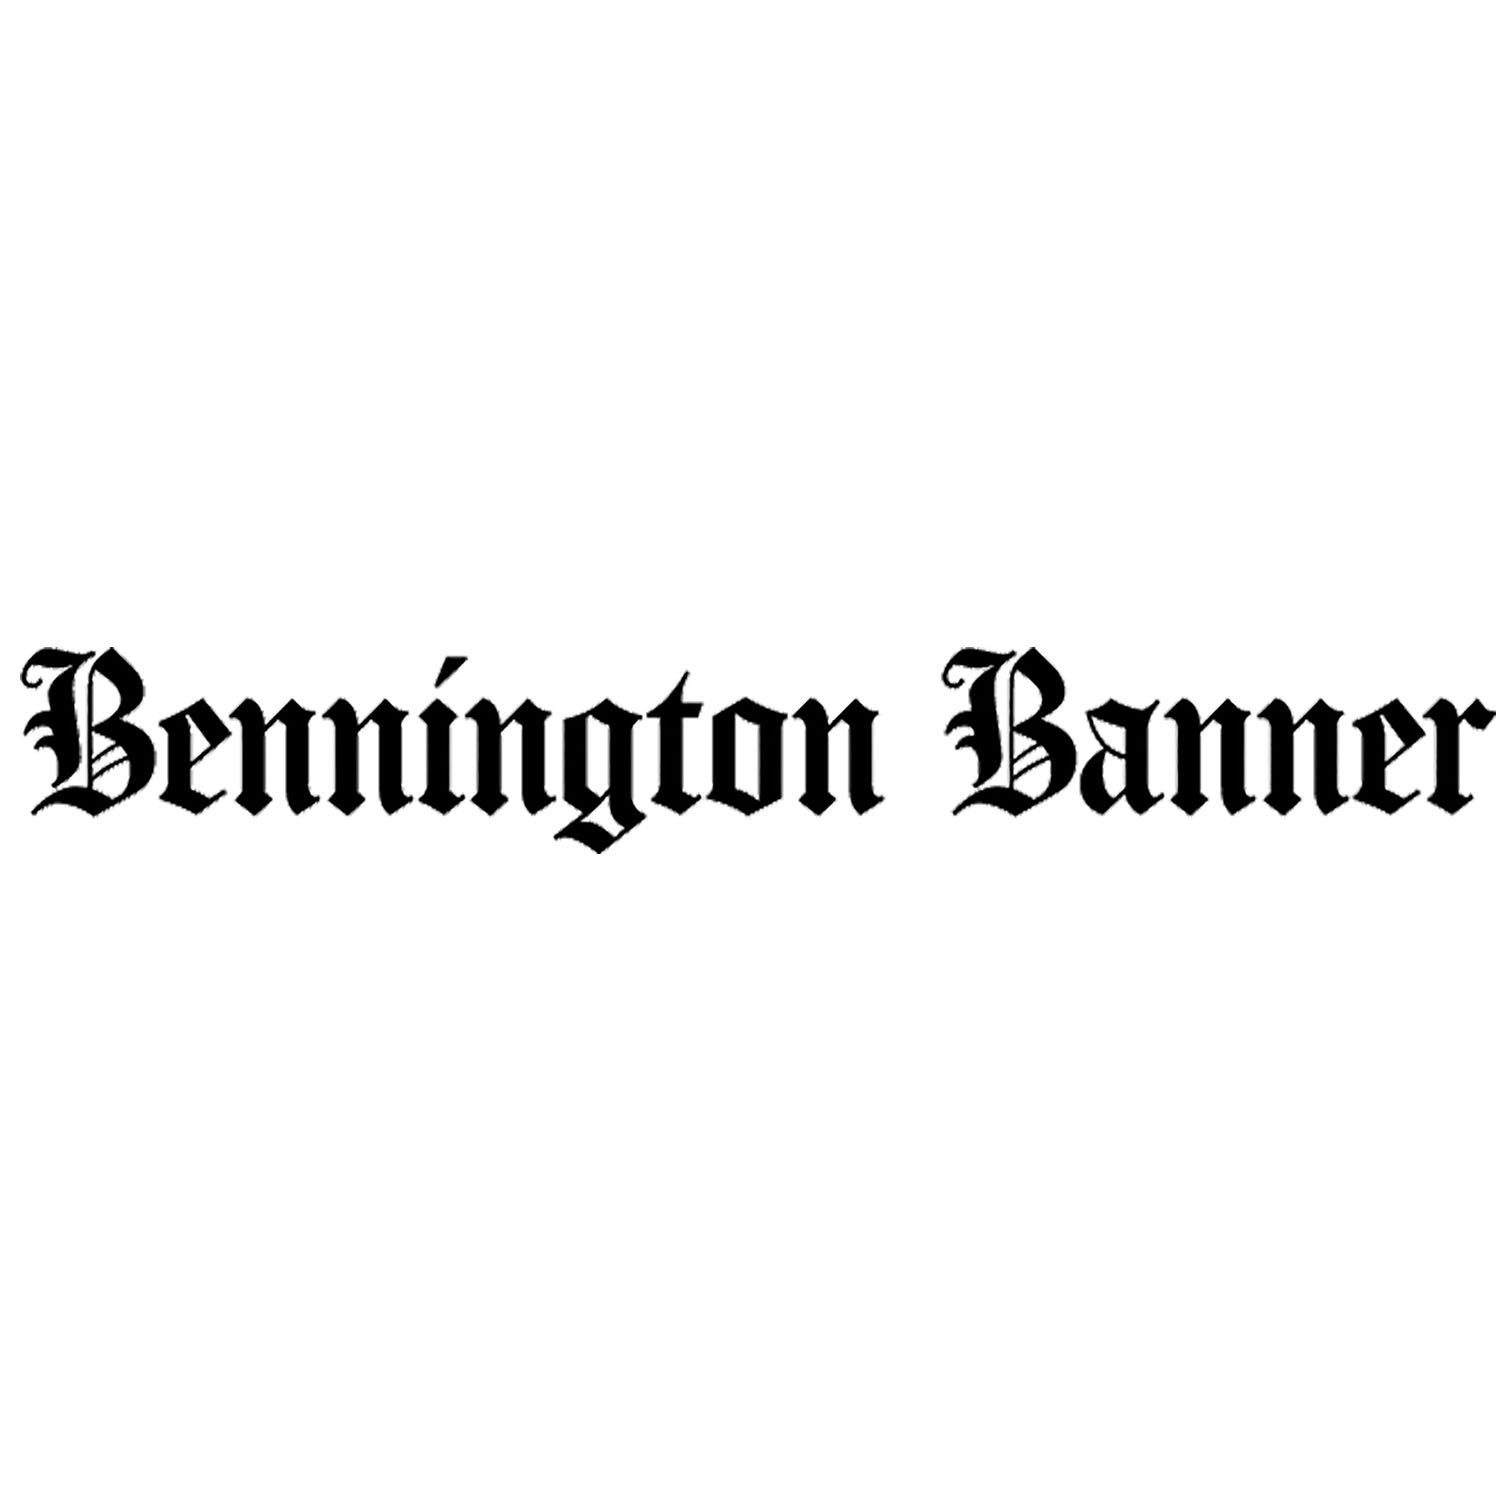 Bennington-Banner_Square.jpg